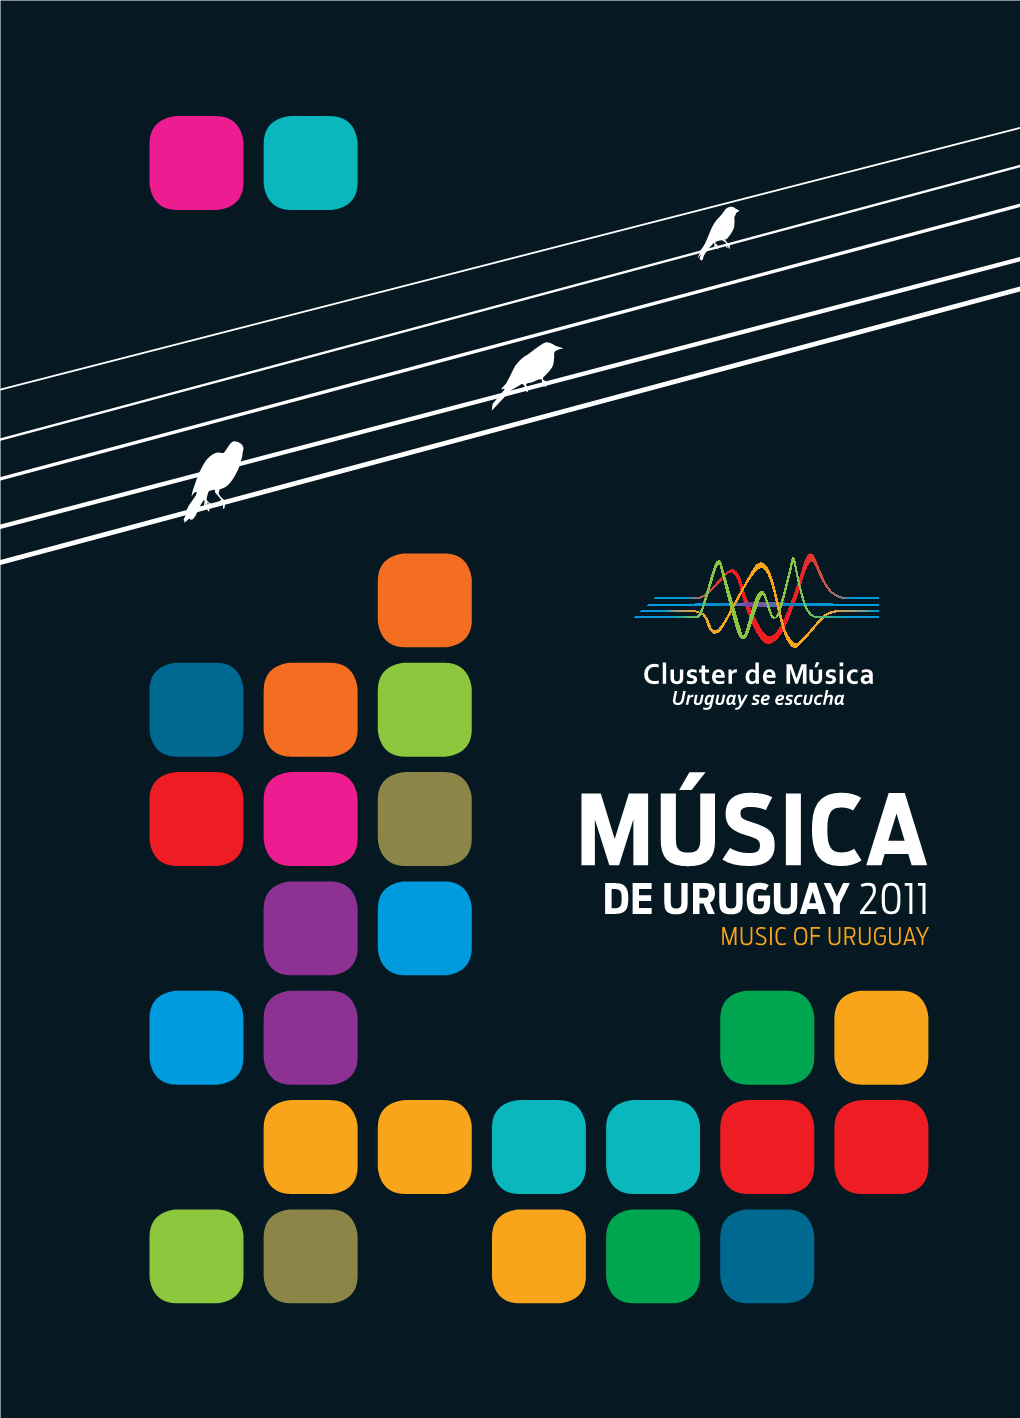 De Uruguay 2011 Music of Uruguay